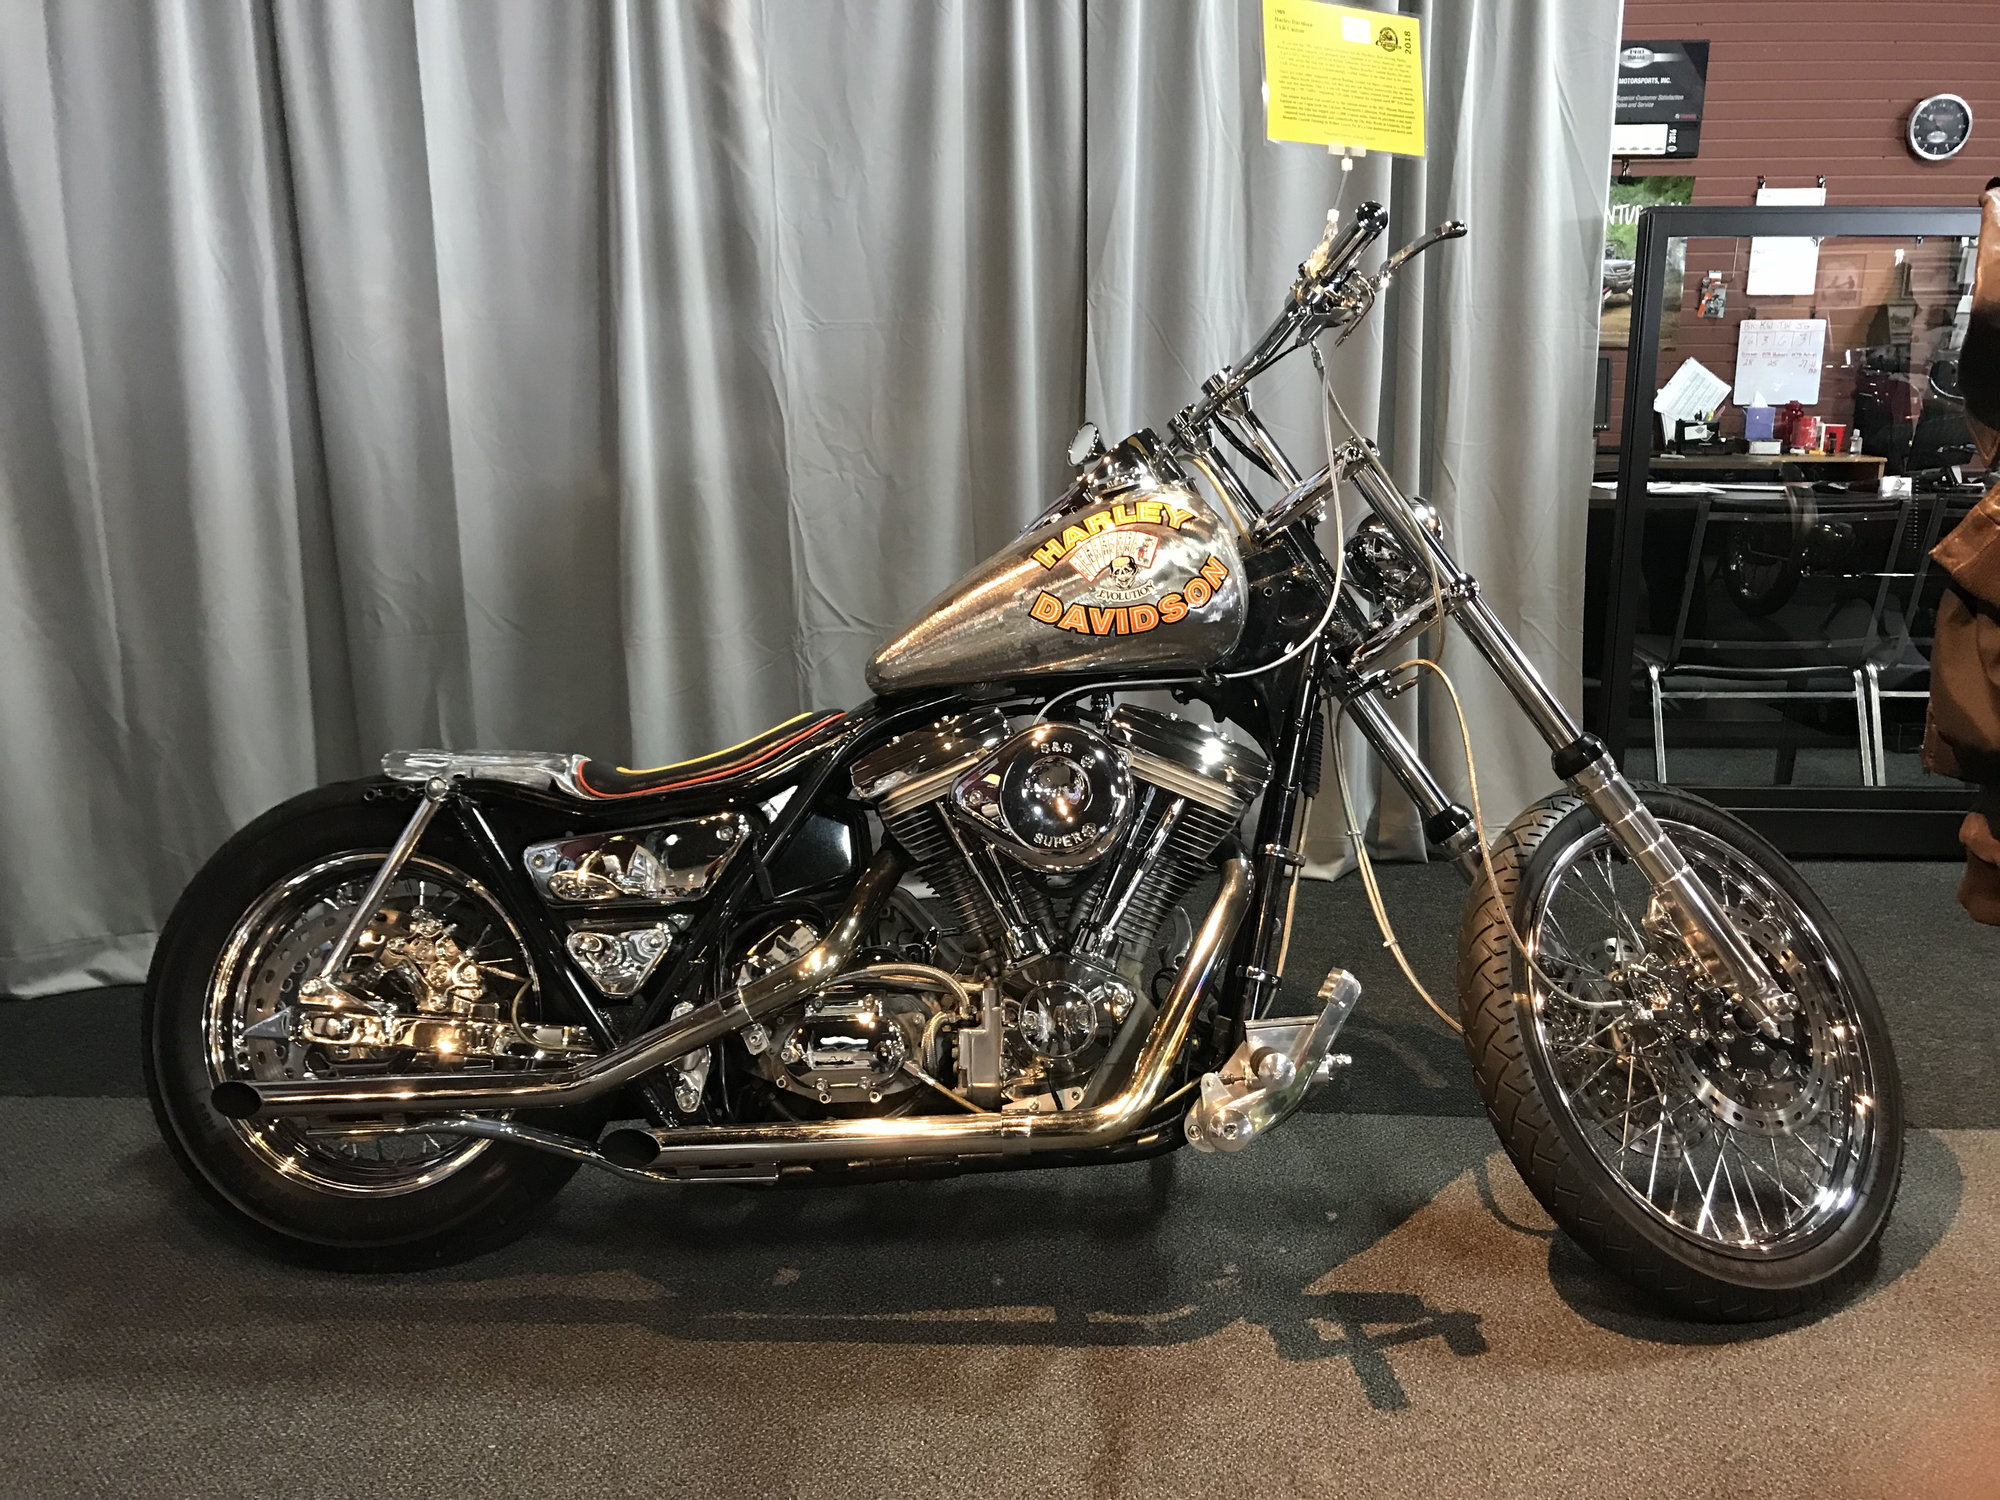 Harley Davidson Marlboro Man Bike For Sale Off 63 Medpharmres Com